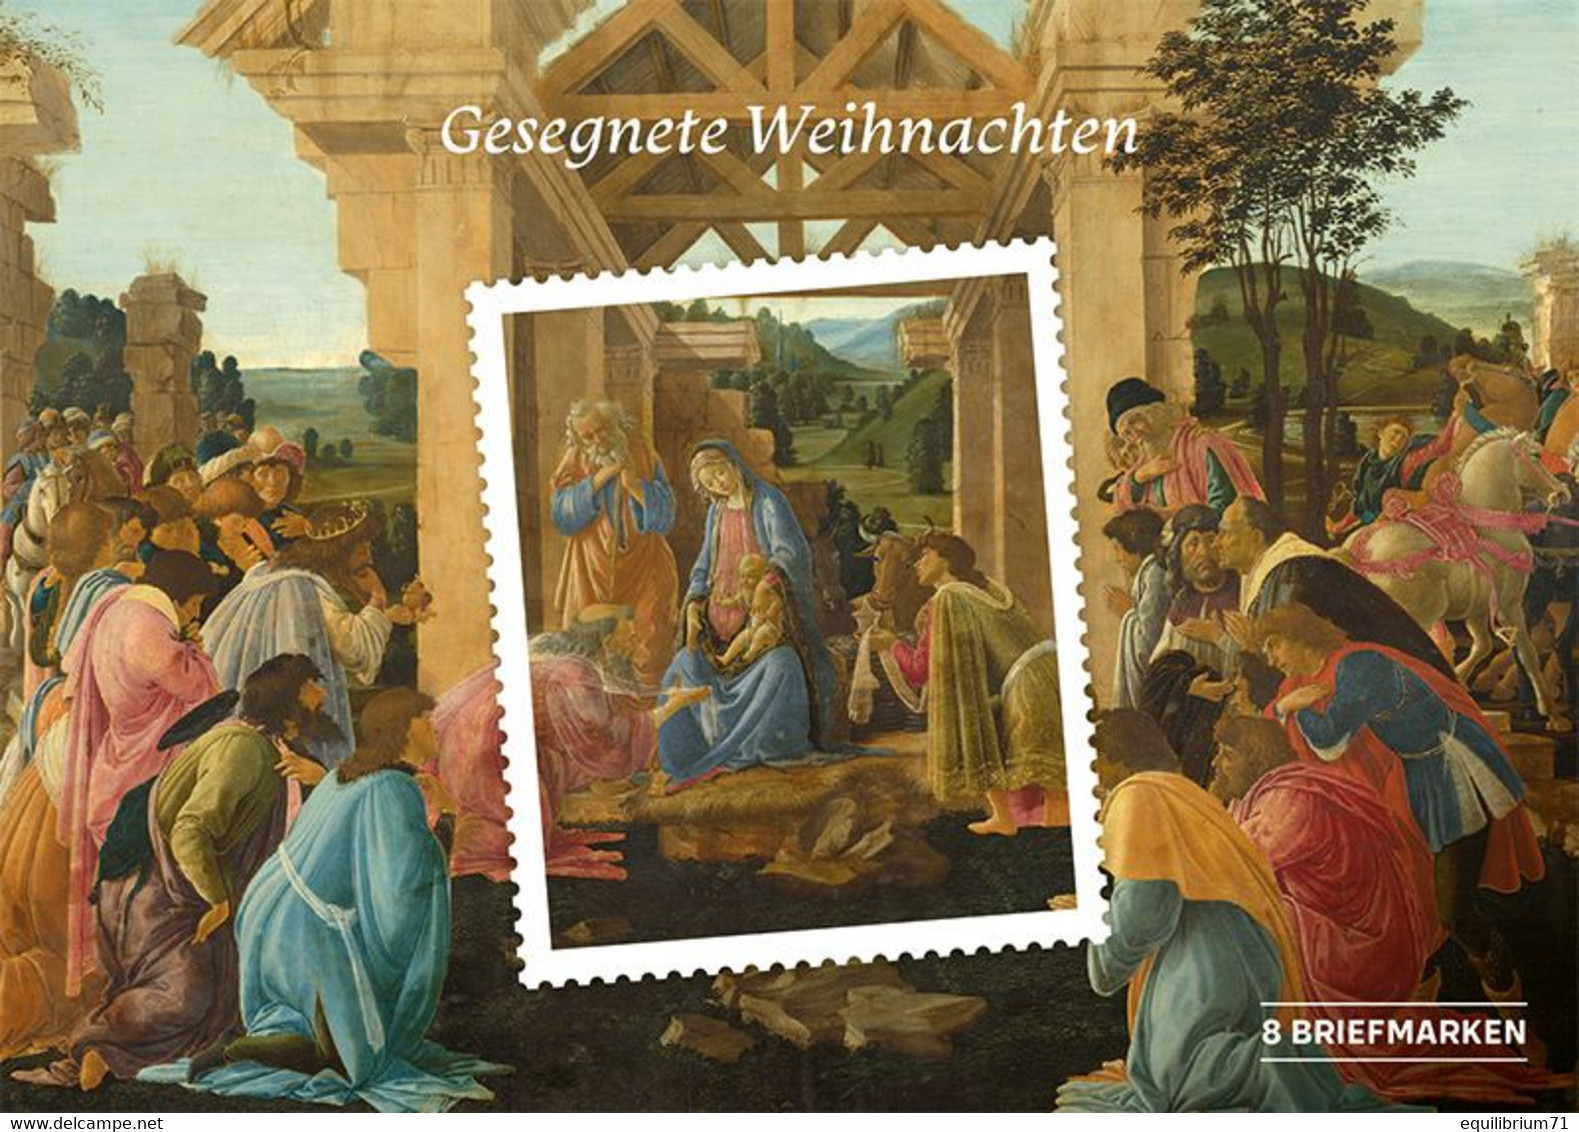 Autriche** - Timbres De Noël / Kerst Postzegels / Weihnachtsmarken / Christmas Stamps - Paintings